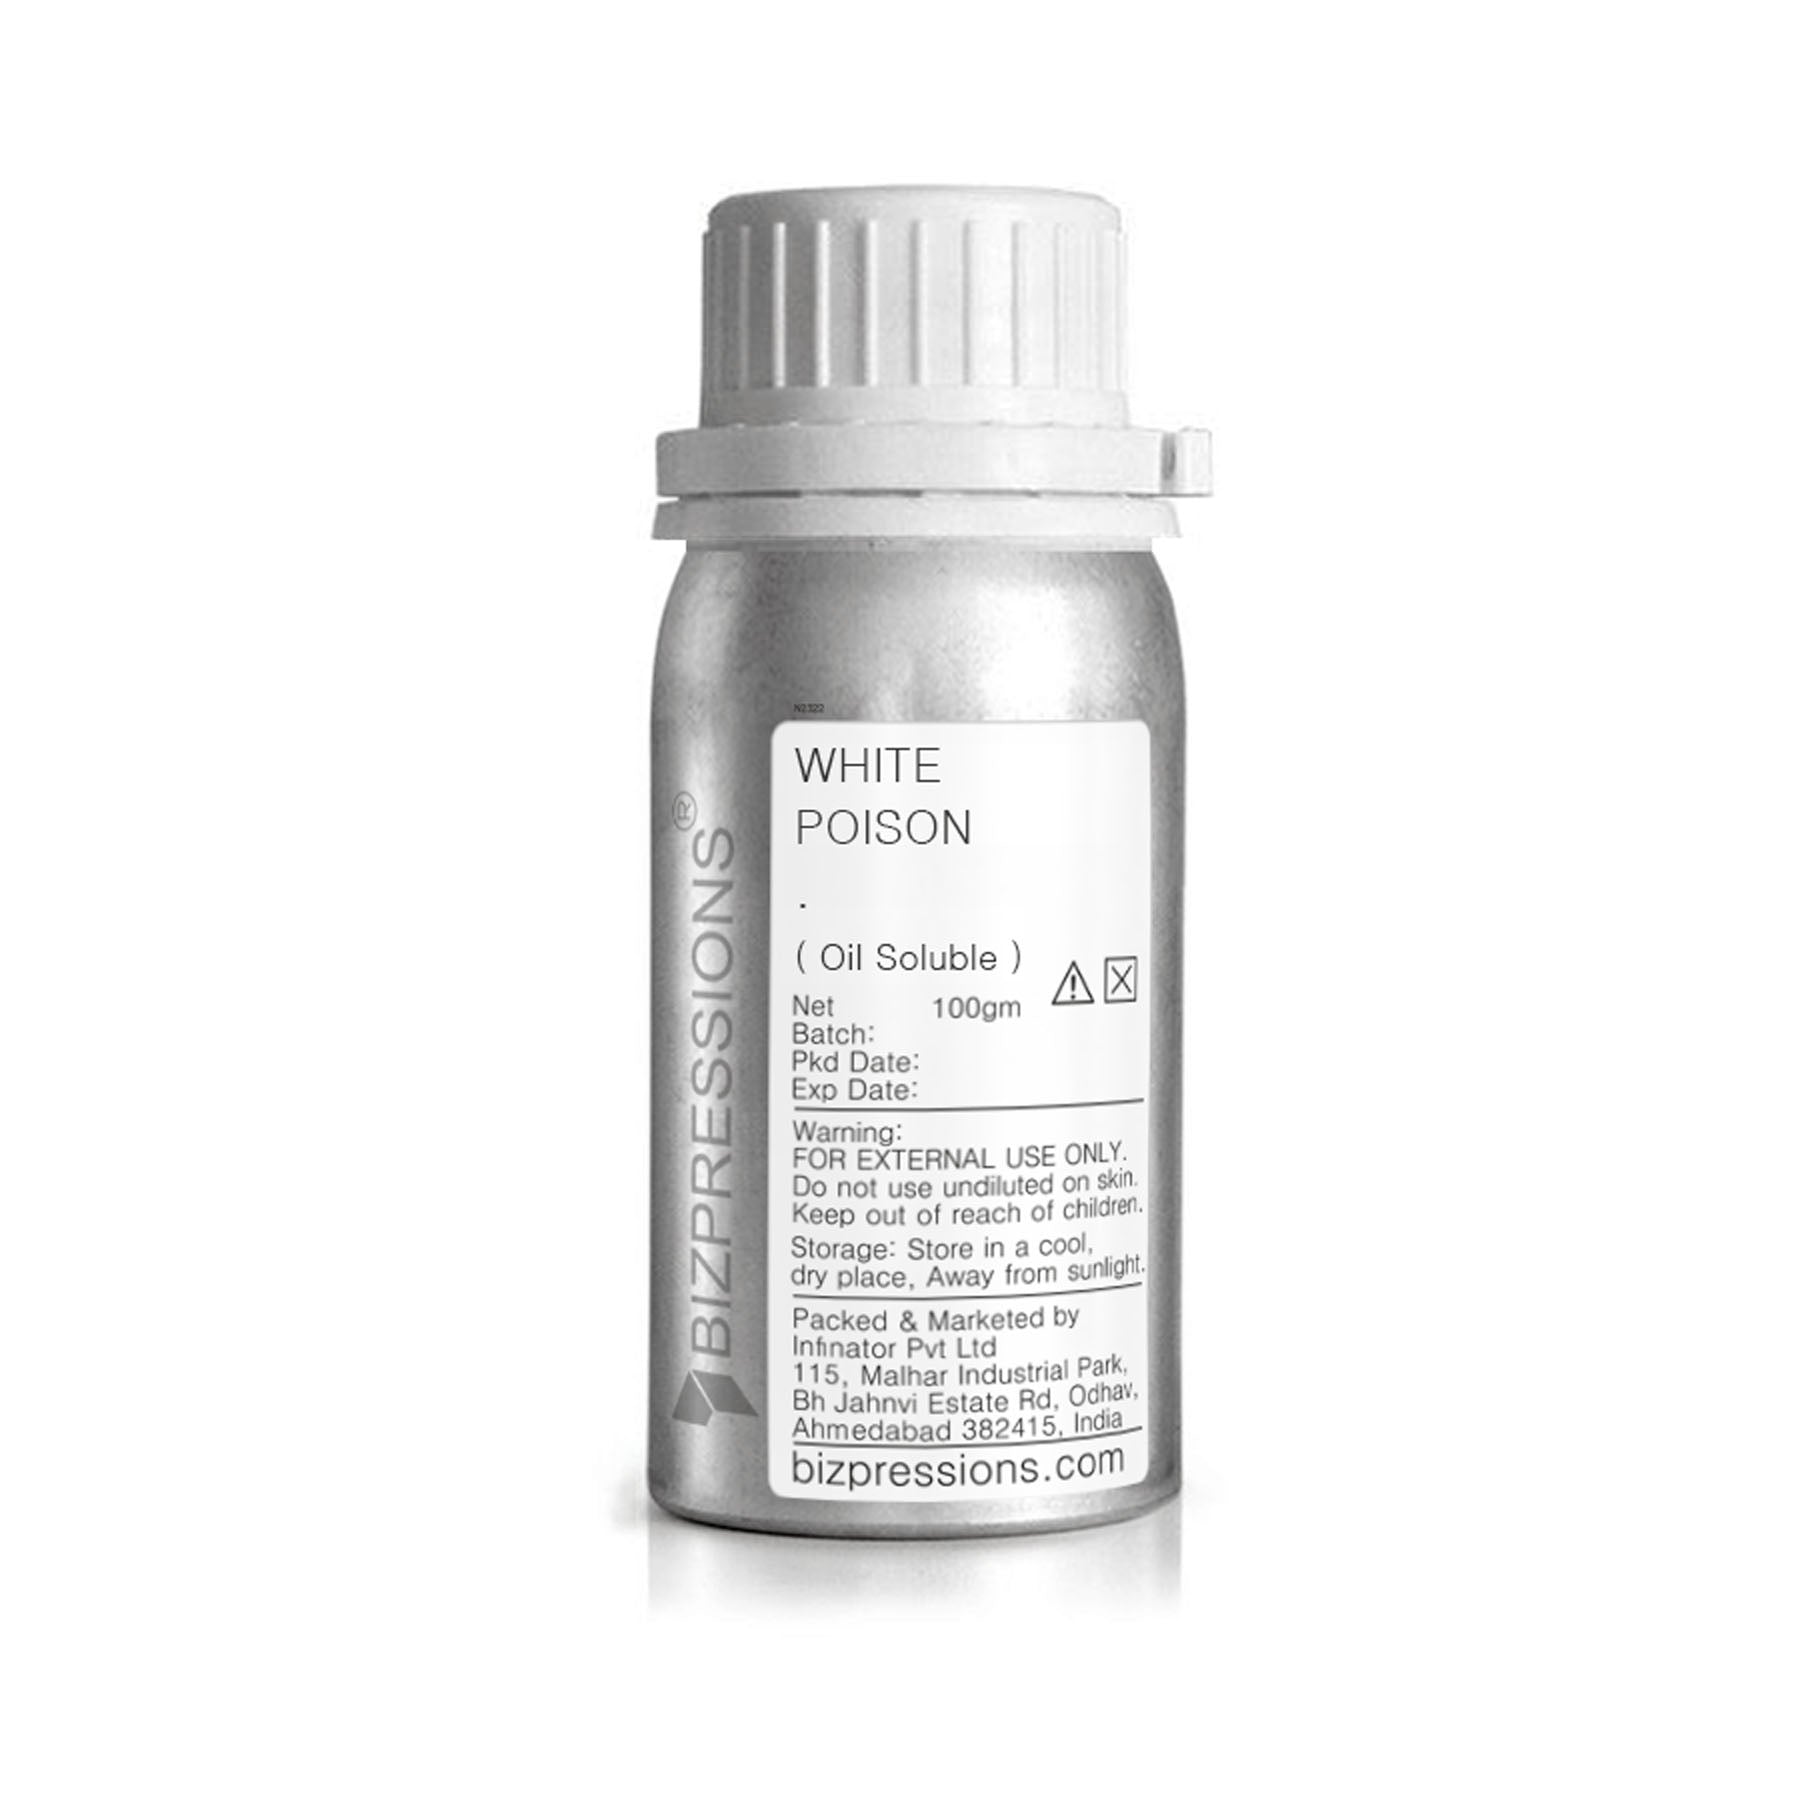 WHITE POISON - Fragrance ( Oil Soluble ) - 100 gm